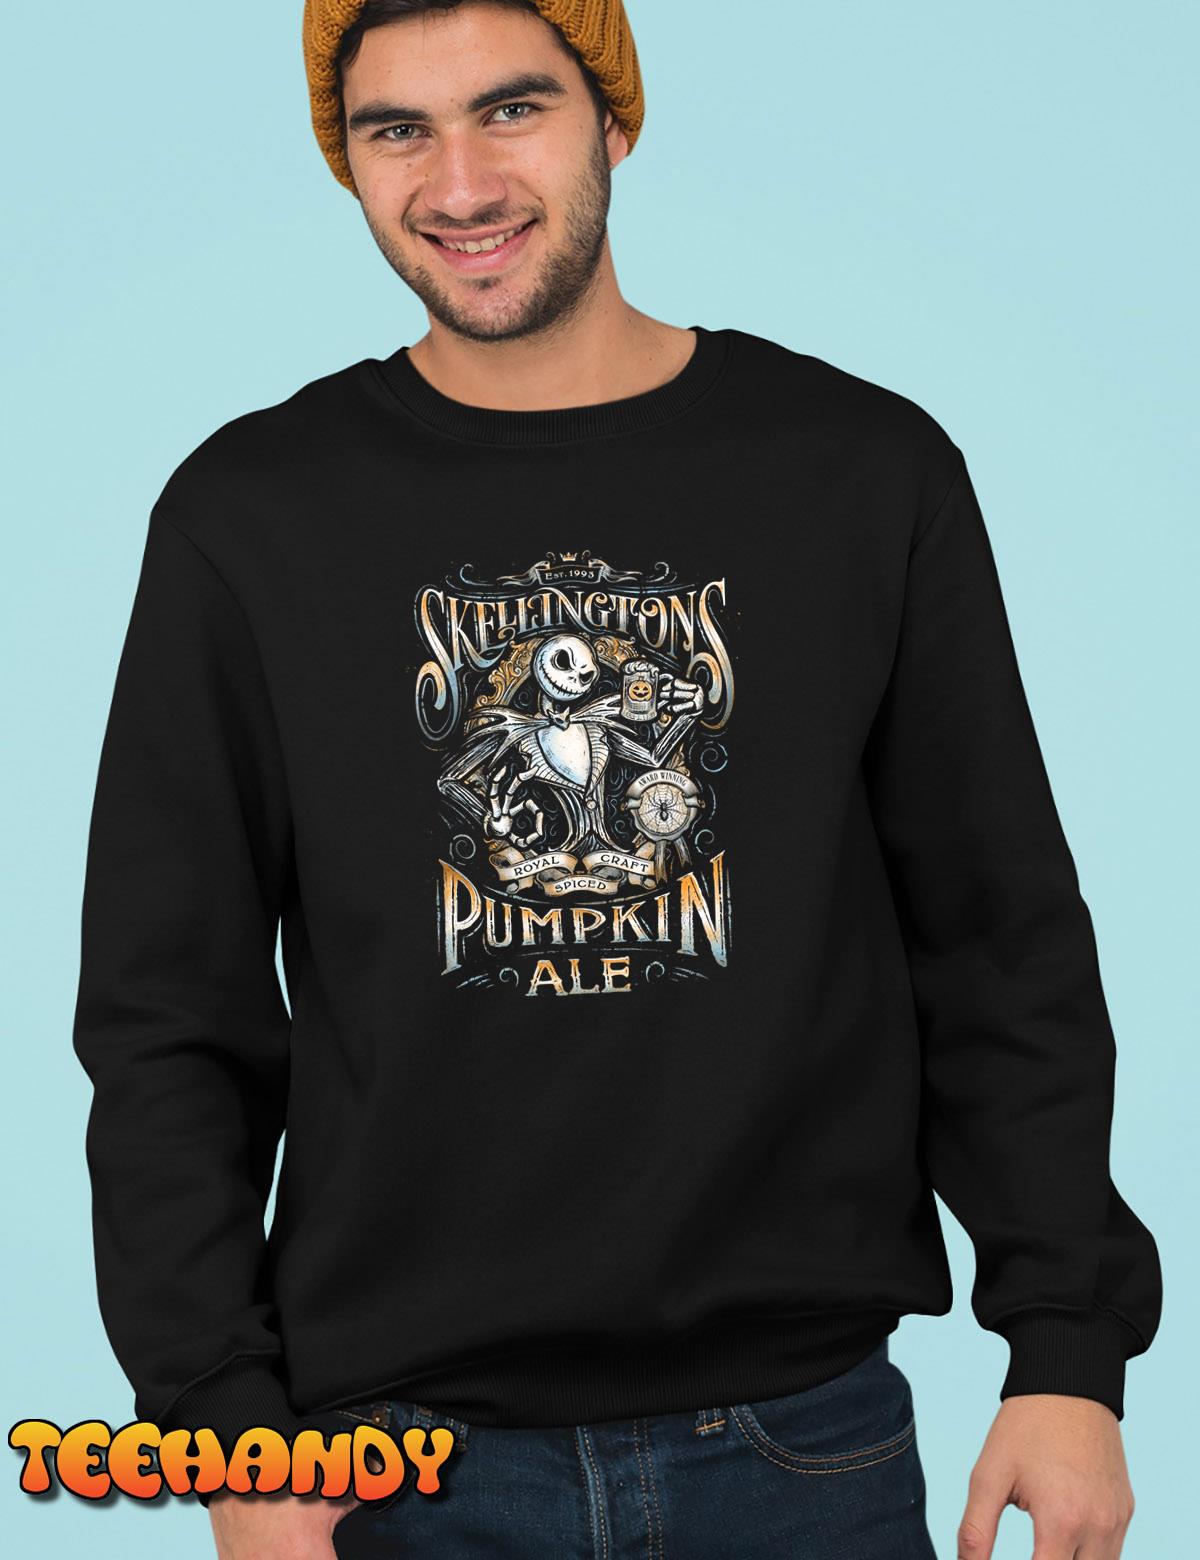 Jack’s Pumpkin Royal Craft Ale Unisex T-Shirt